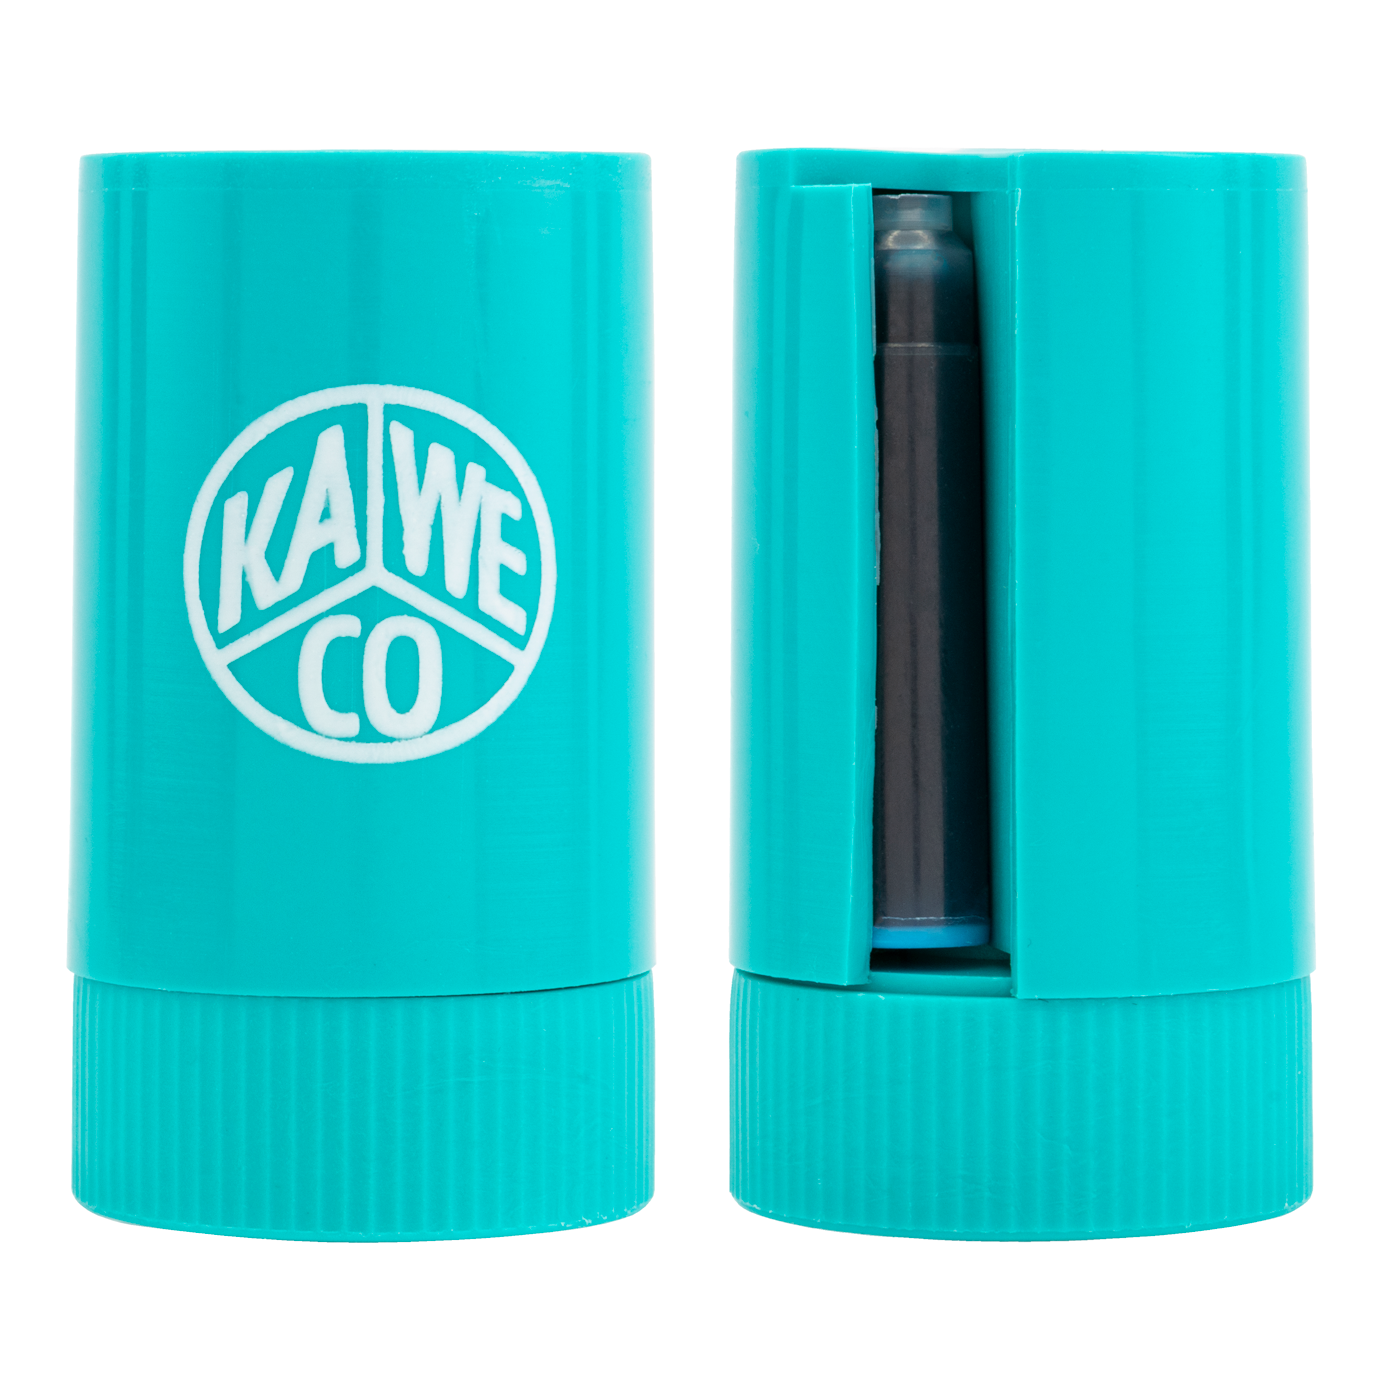 Kaweco Twist and Test Cartridge dispenser 8 colors